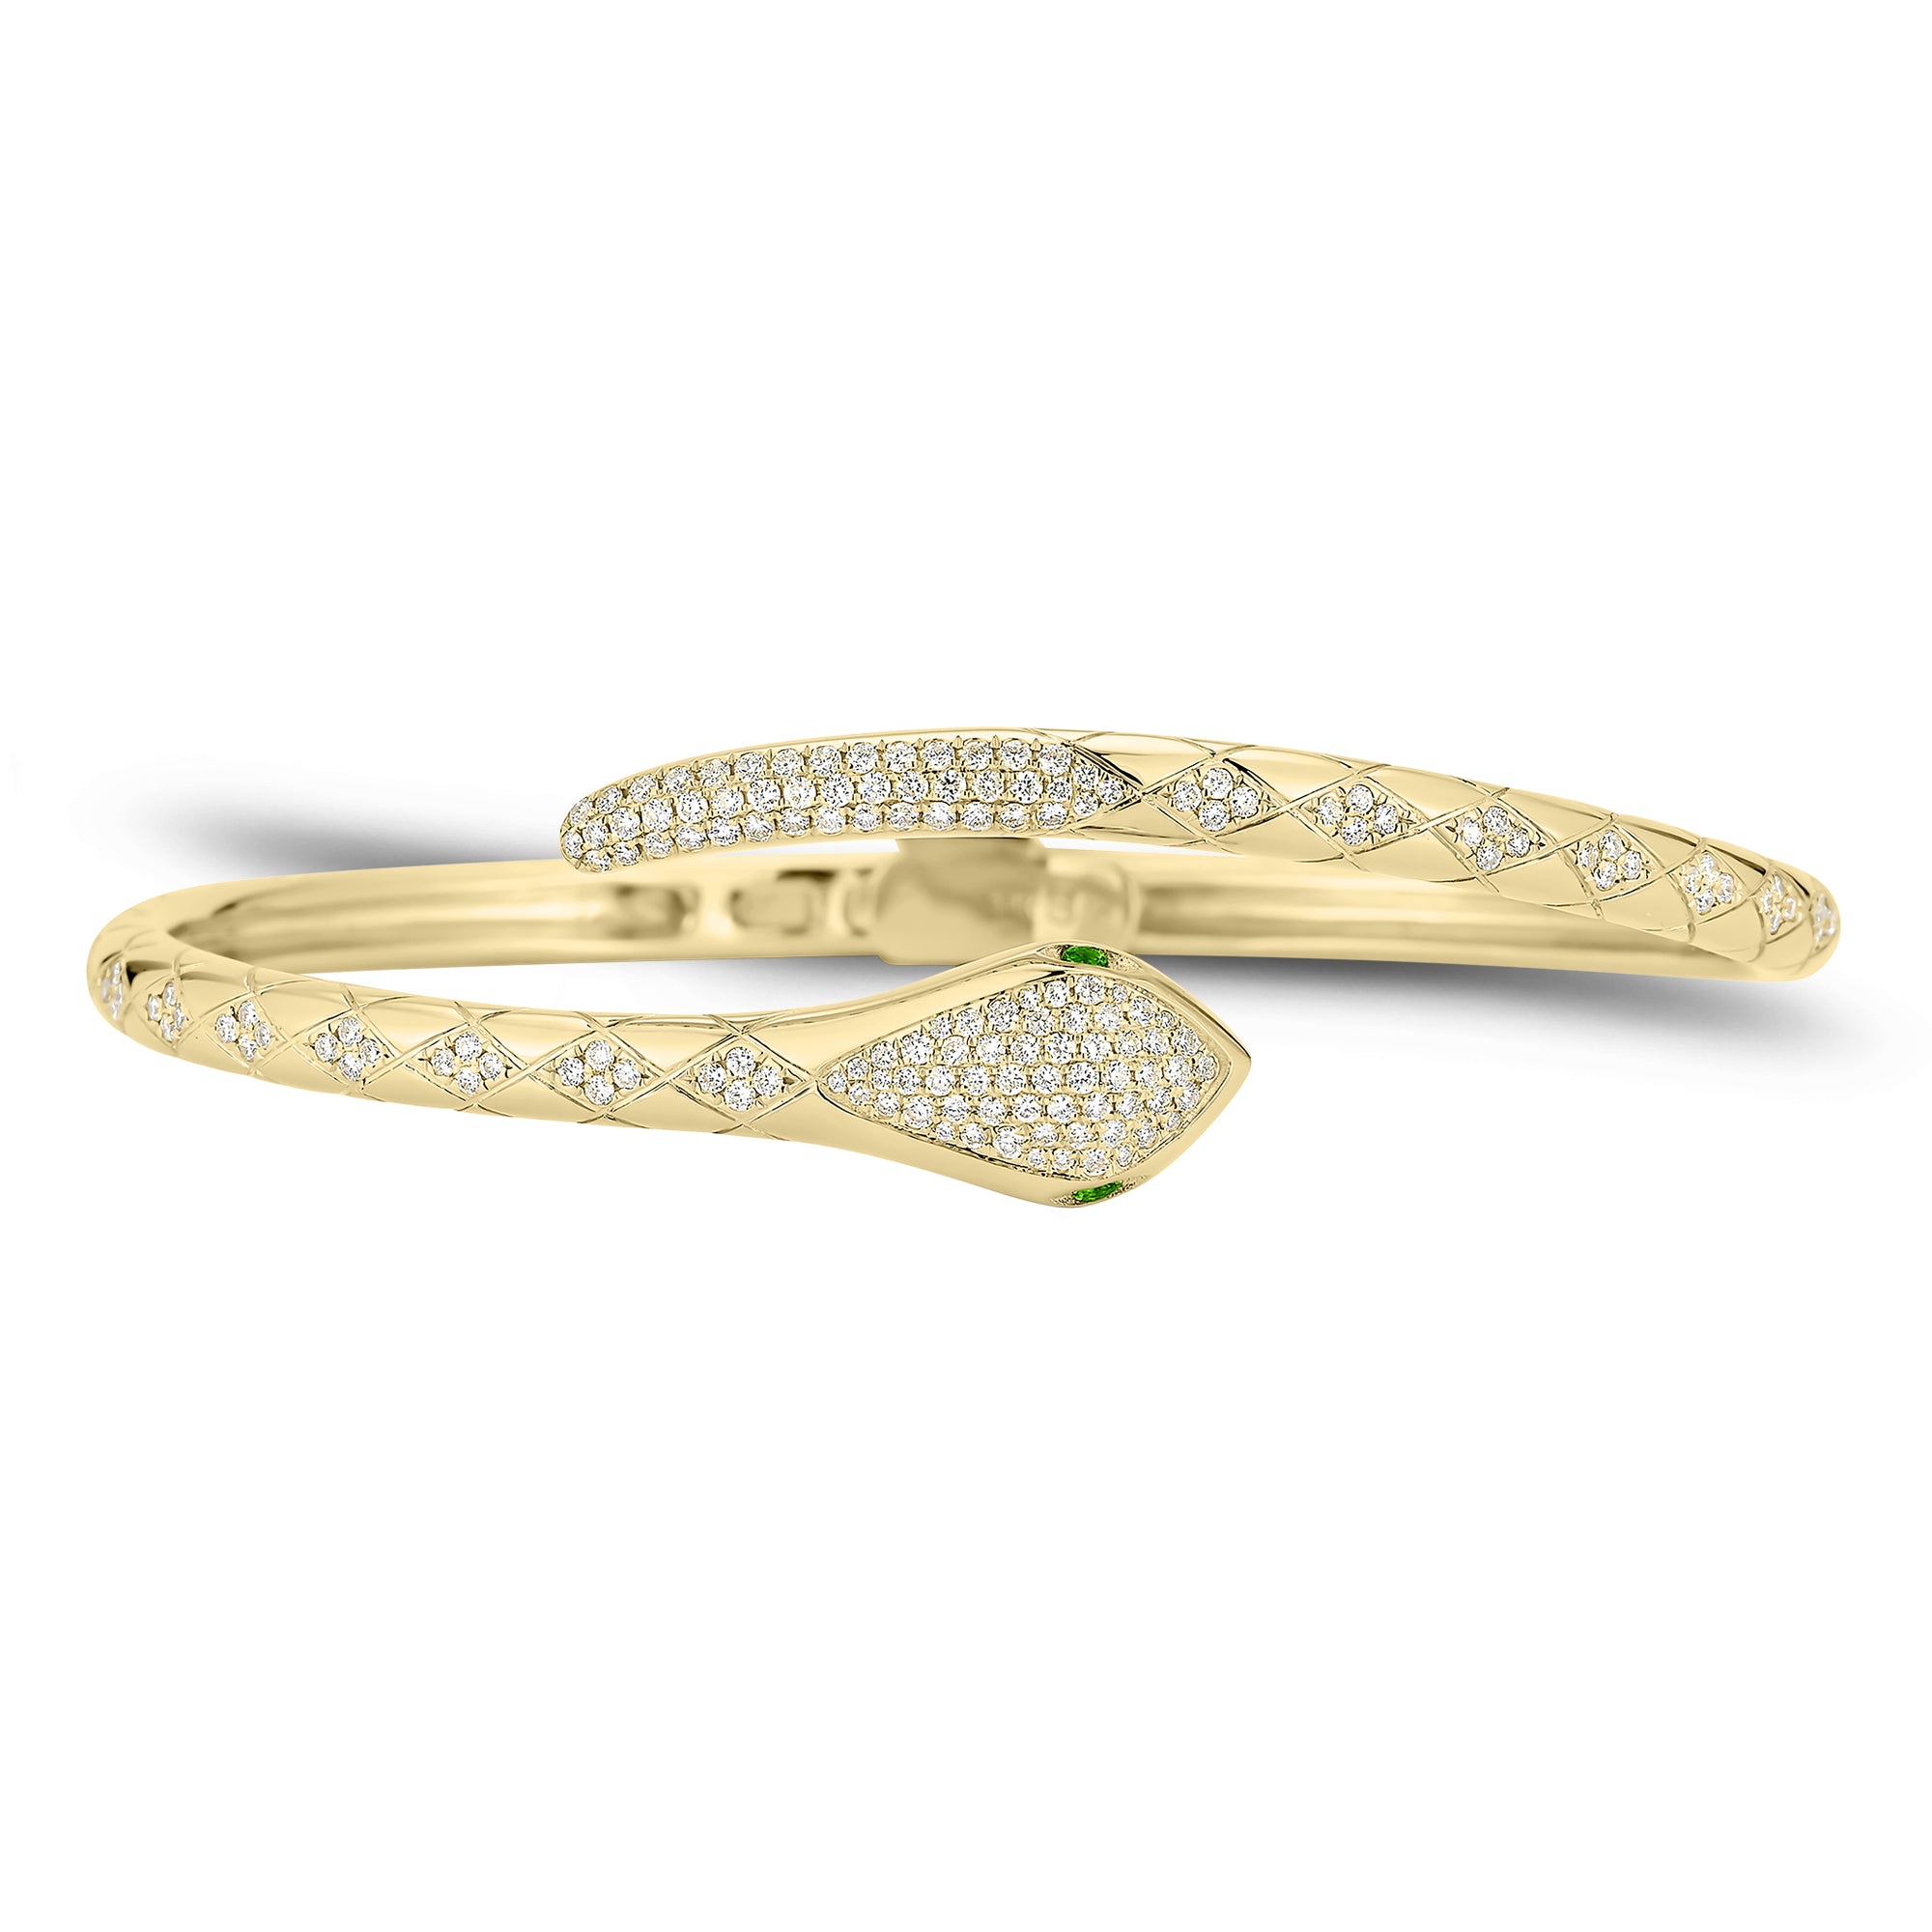 Diamond and Tsavorite Serpent Bangle Bracelet - 14K gold weighing 17.88 grams  - 166 round diamonds weighing 0.85 carats